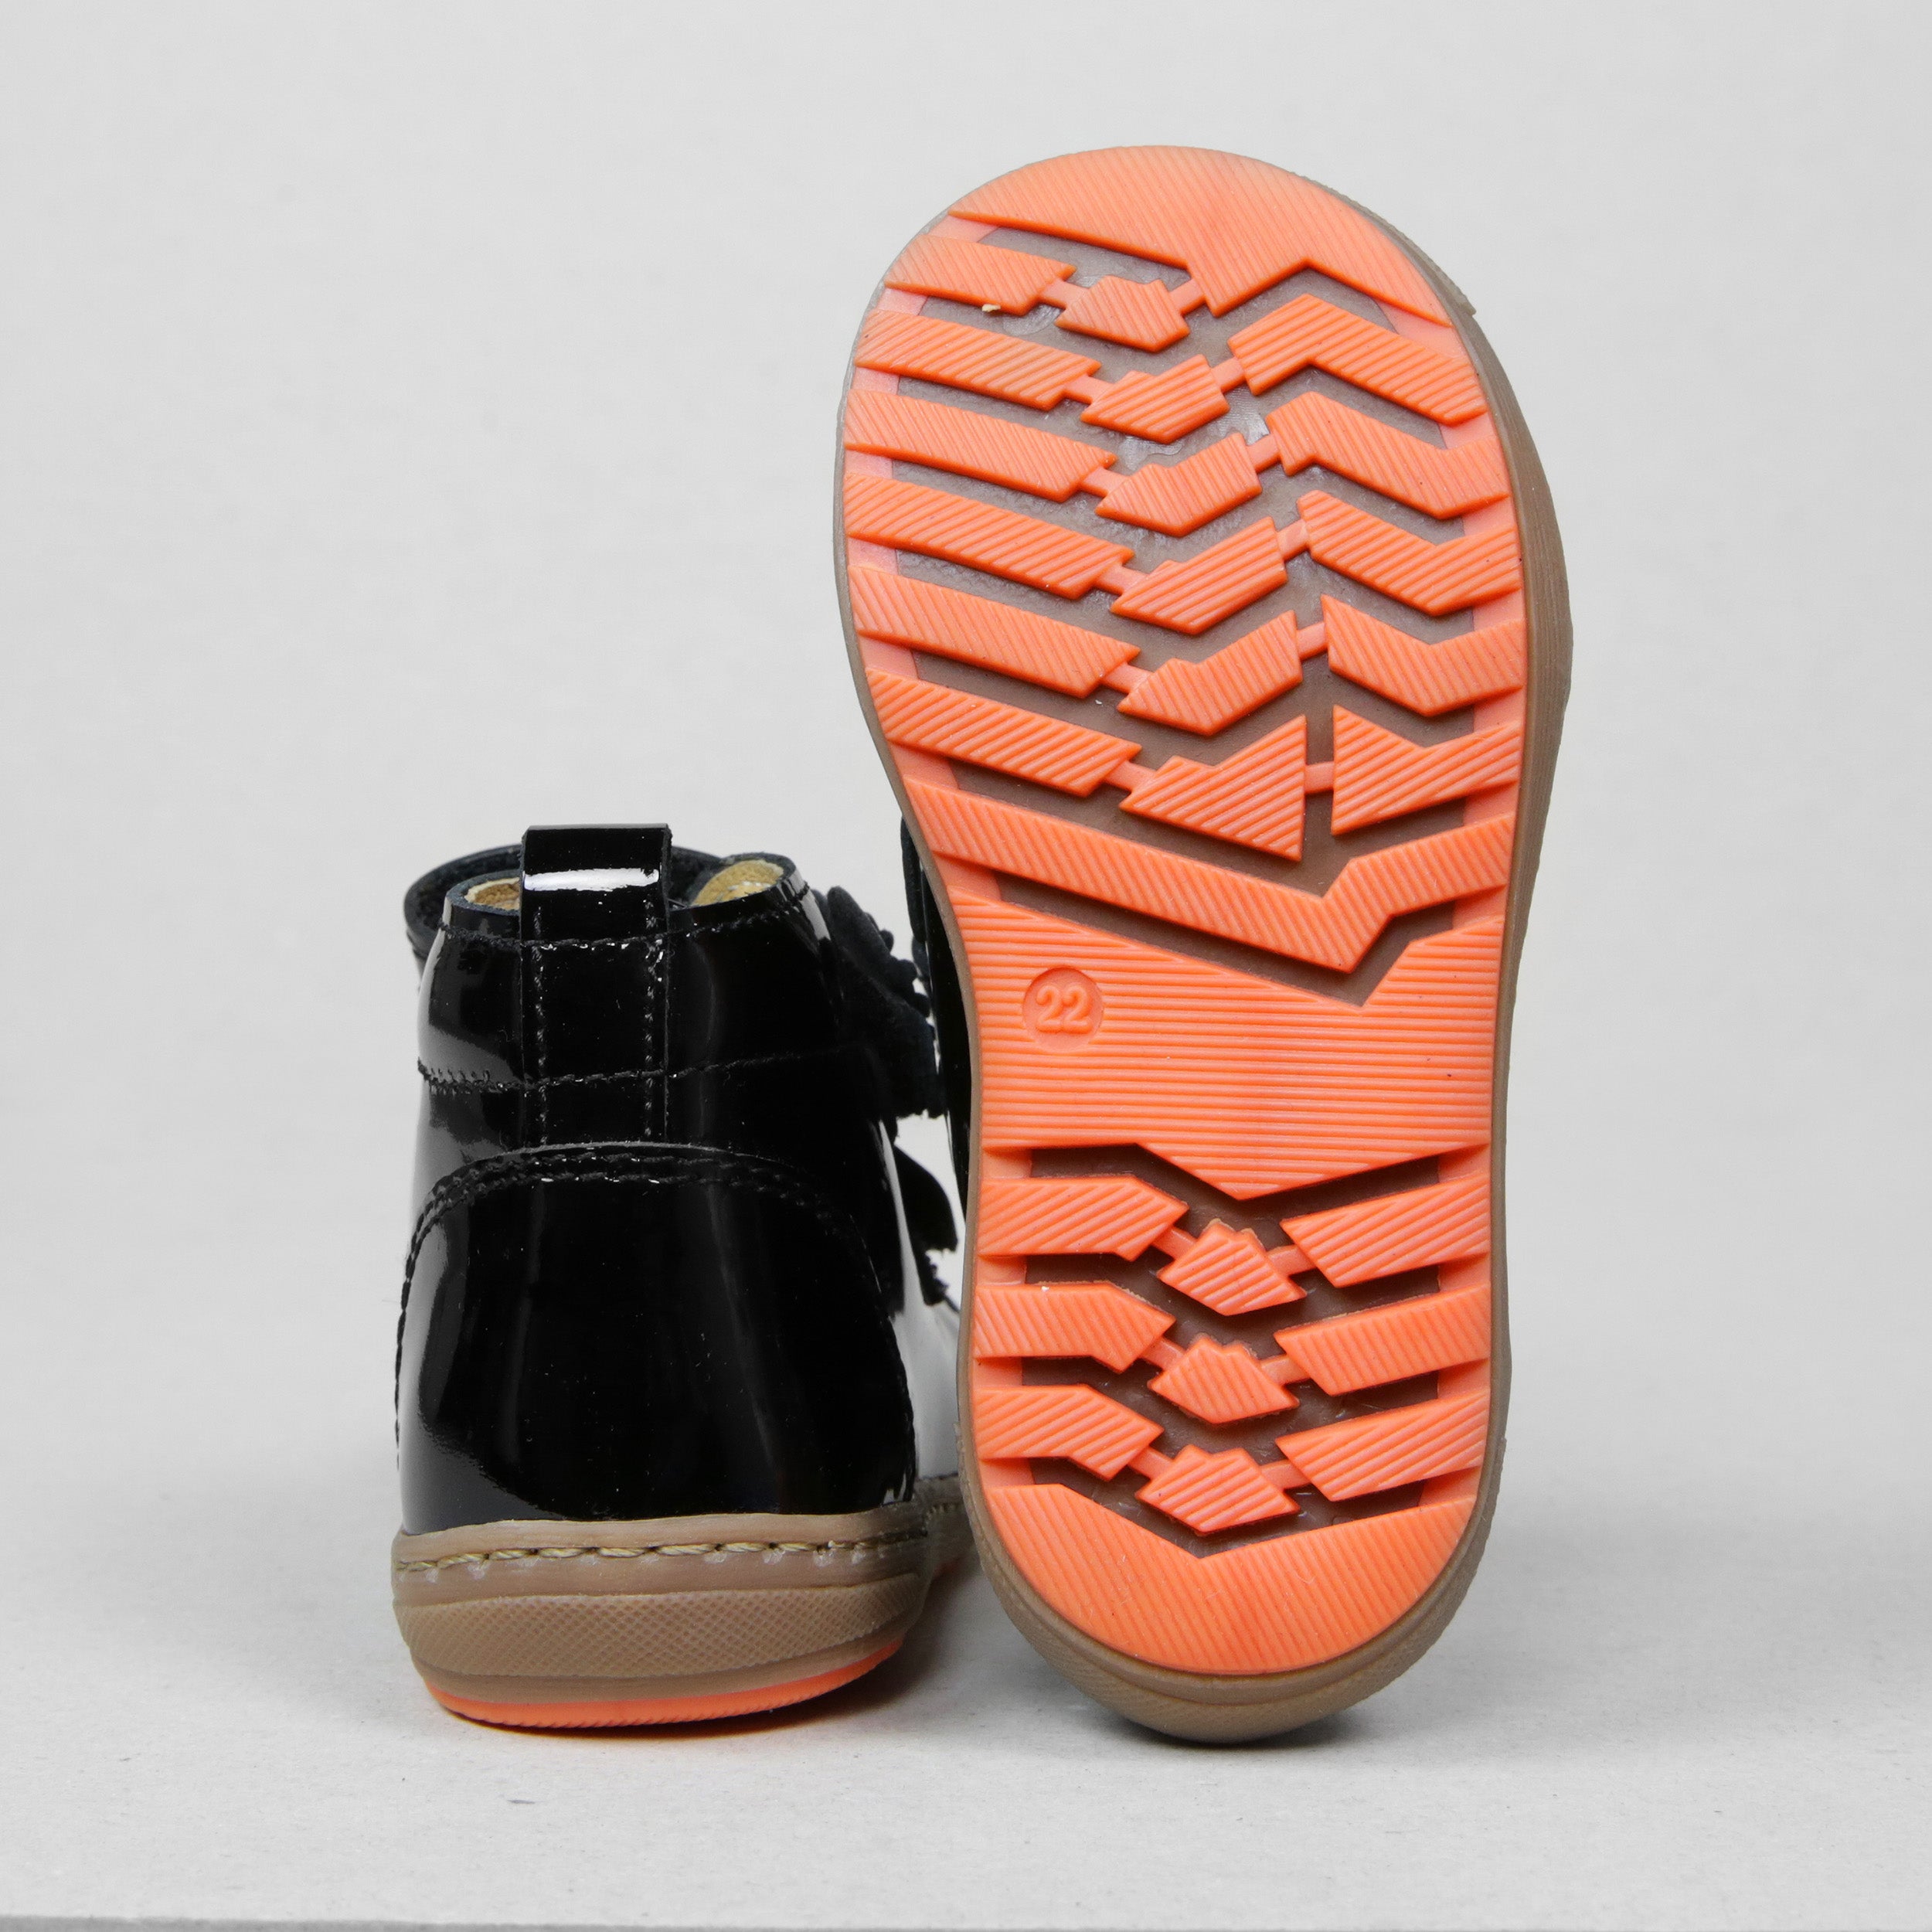 Petasil Drean Kids Girls Black Patent Leather Boots - UK child size 5.5 / EU22